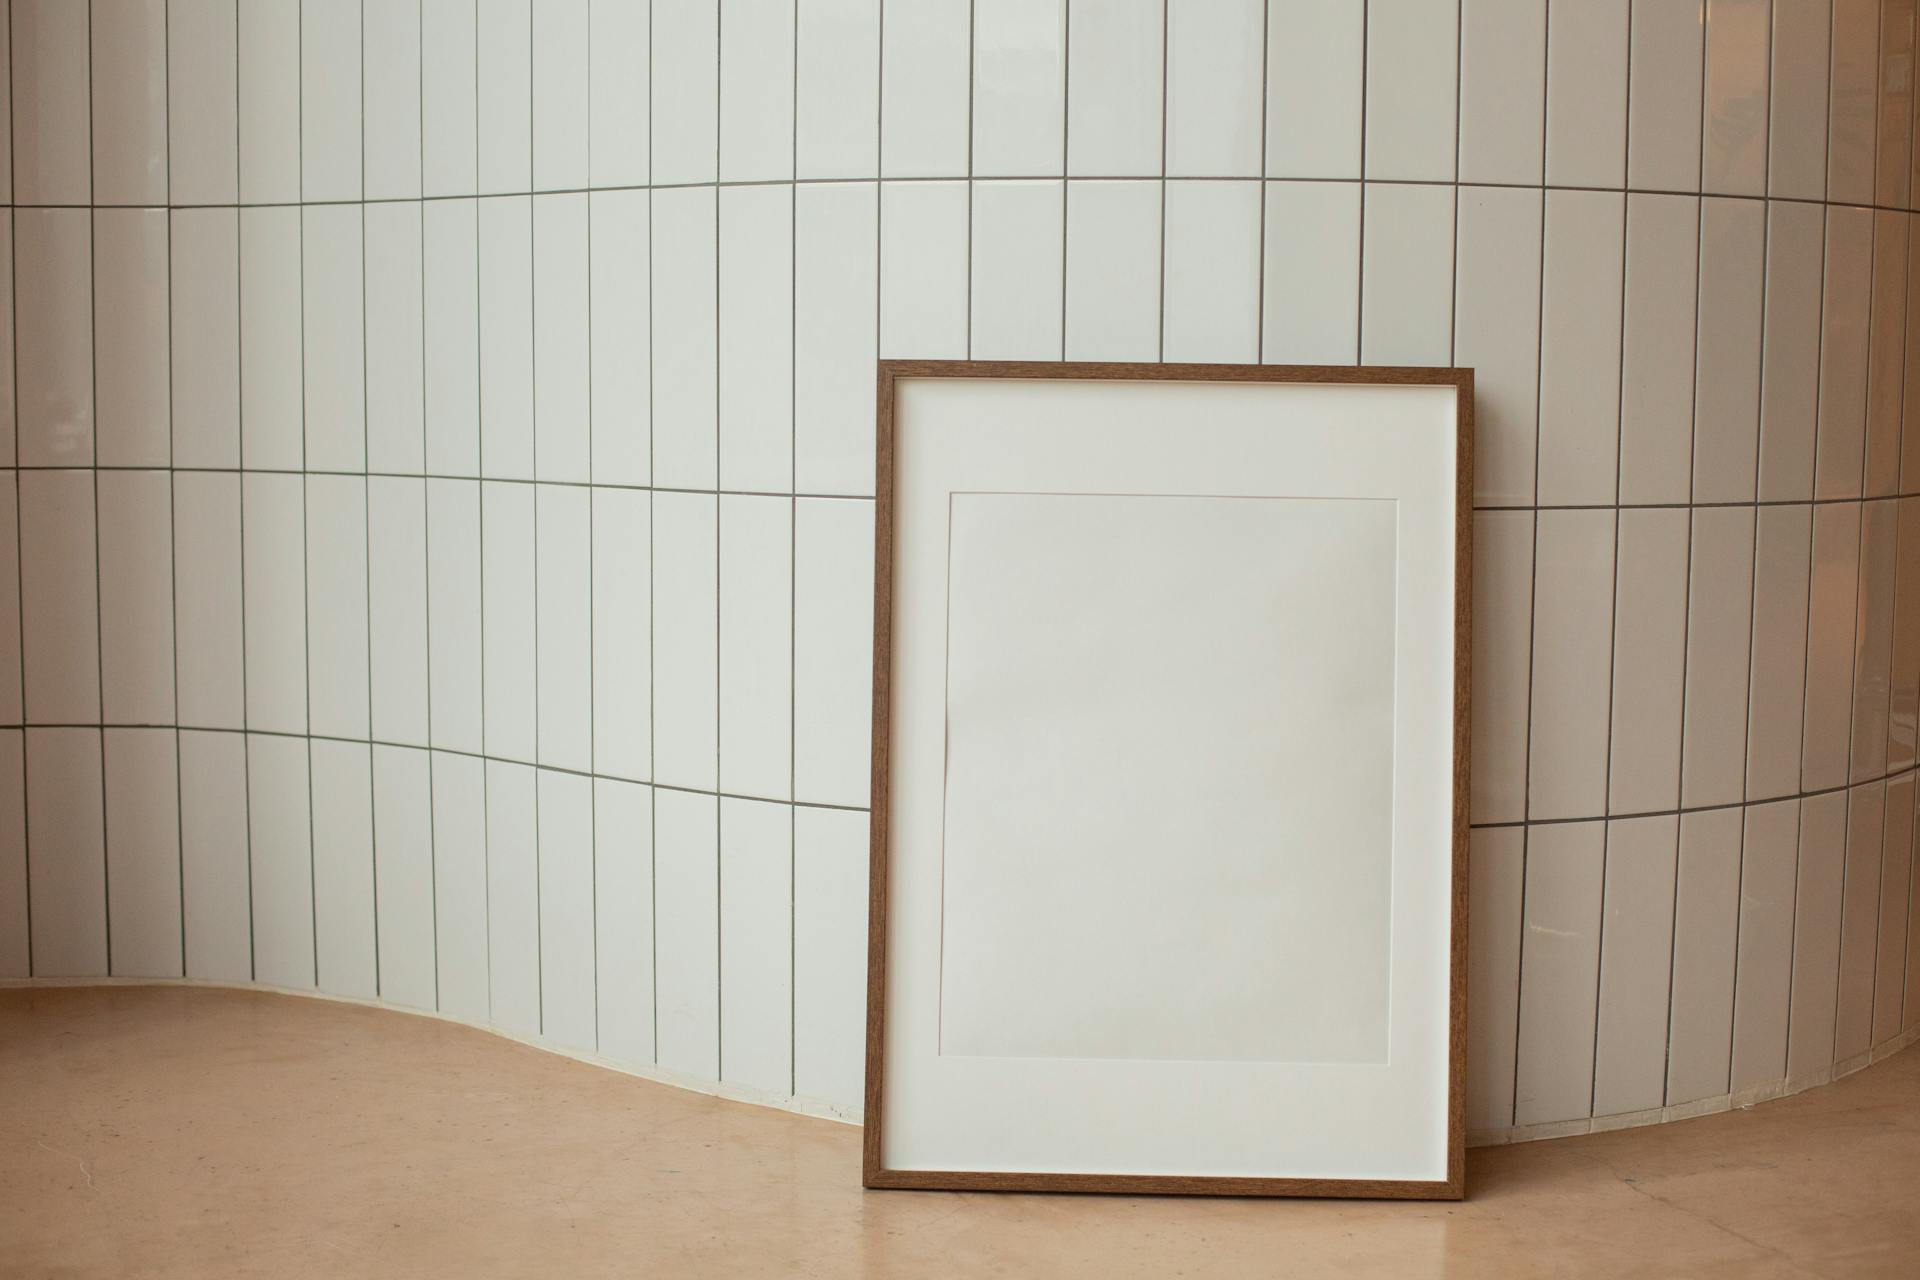 Rectangular empty photo frame against tiled wall